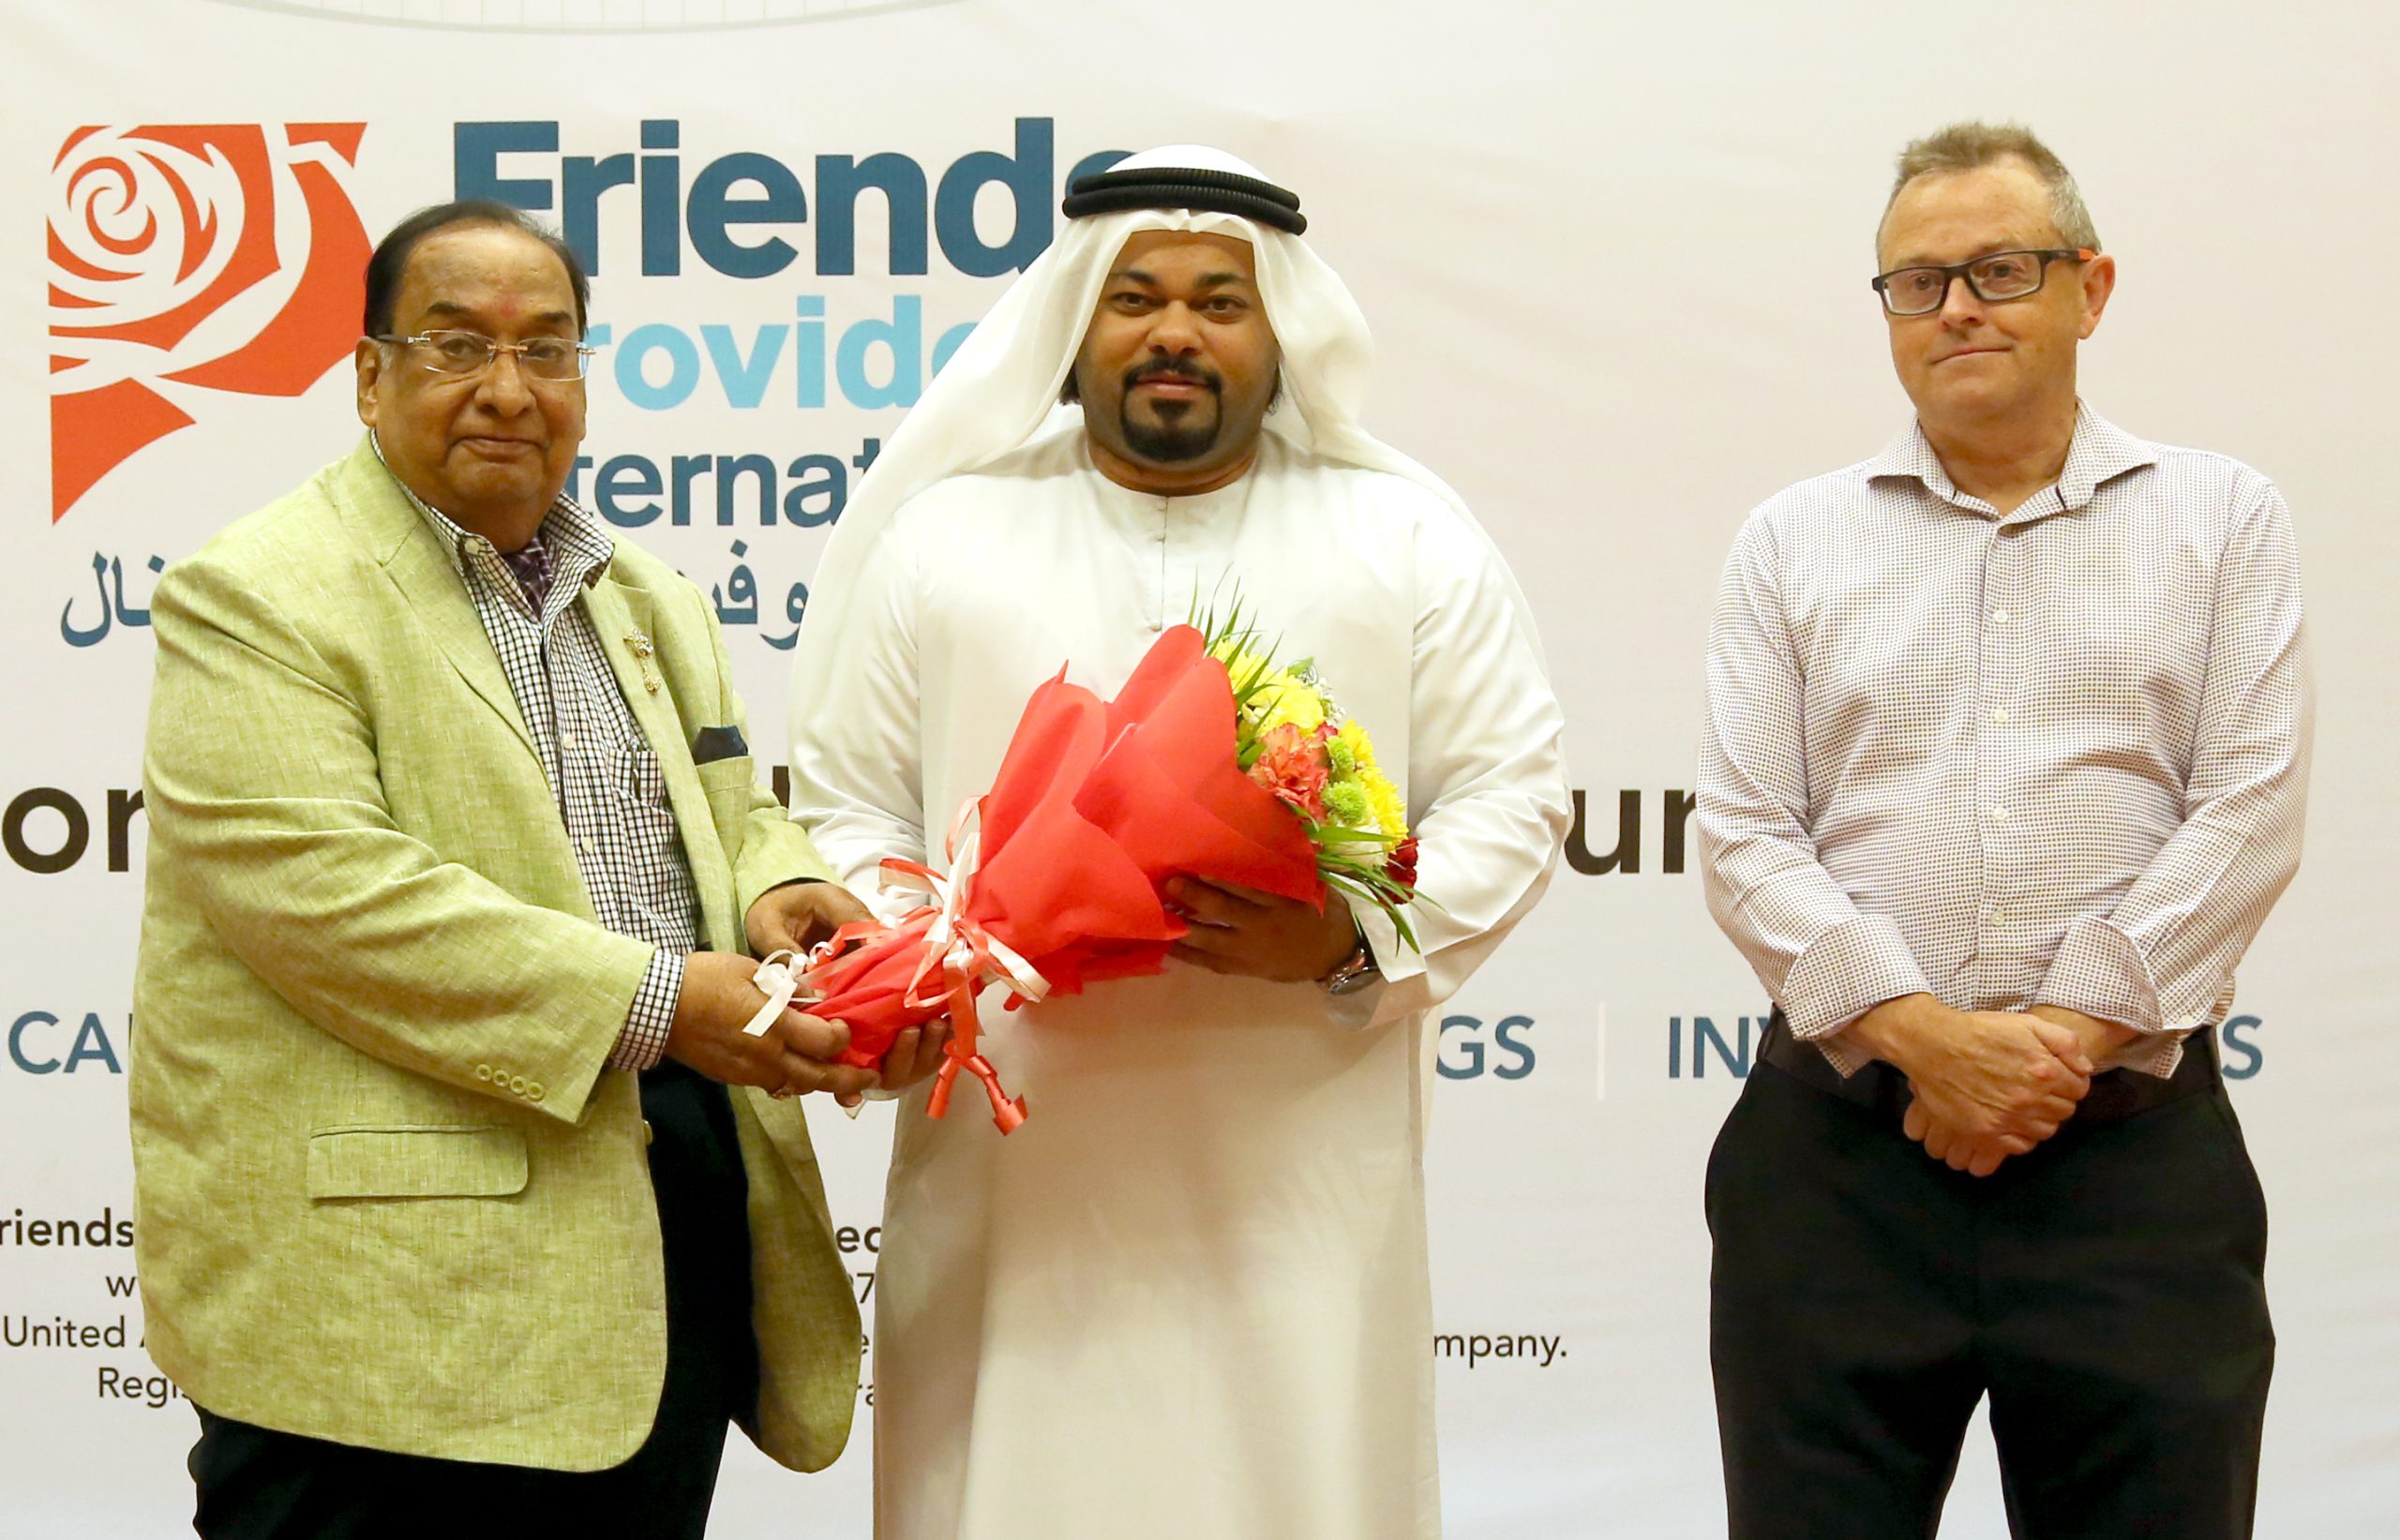 41st UAE Open Badminton Inauguration 2018